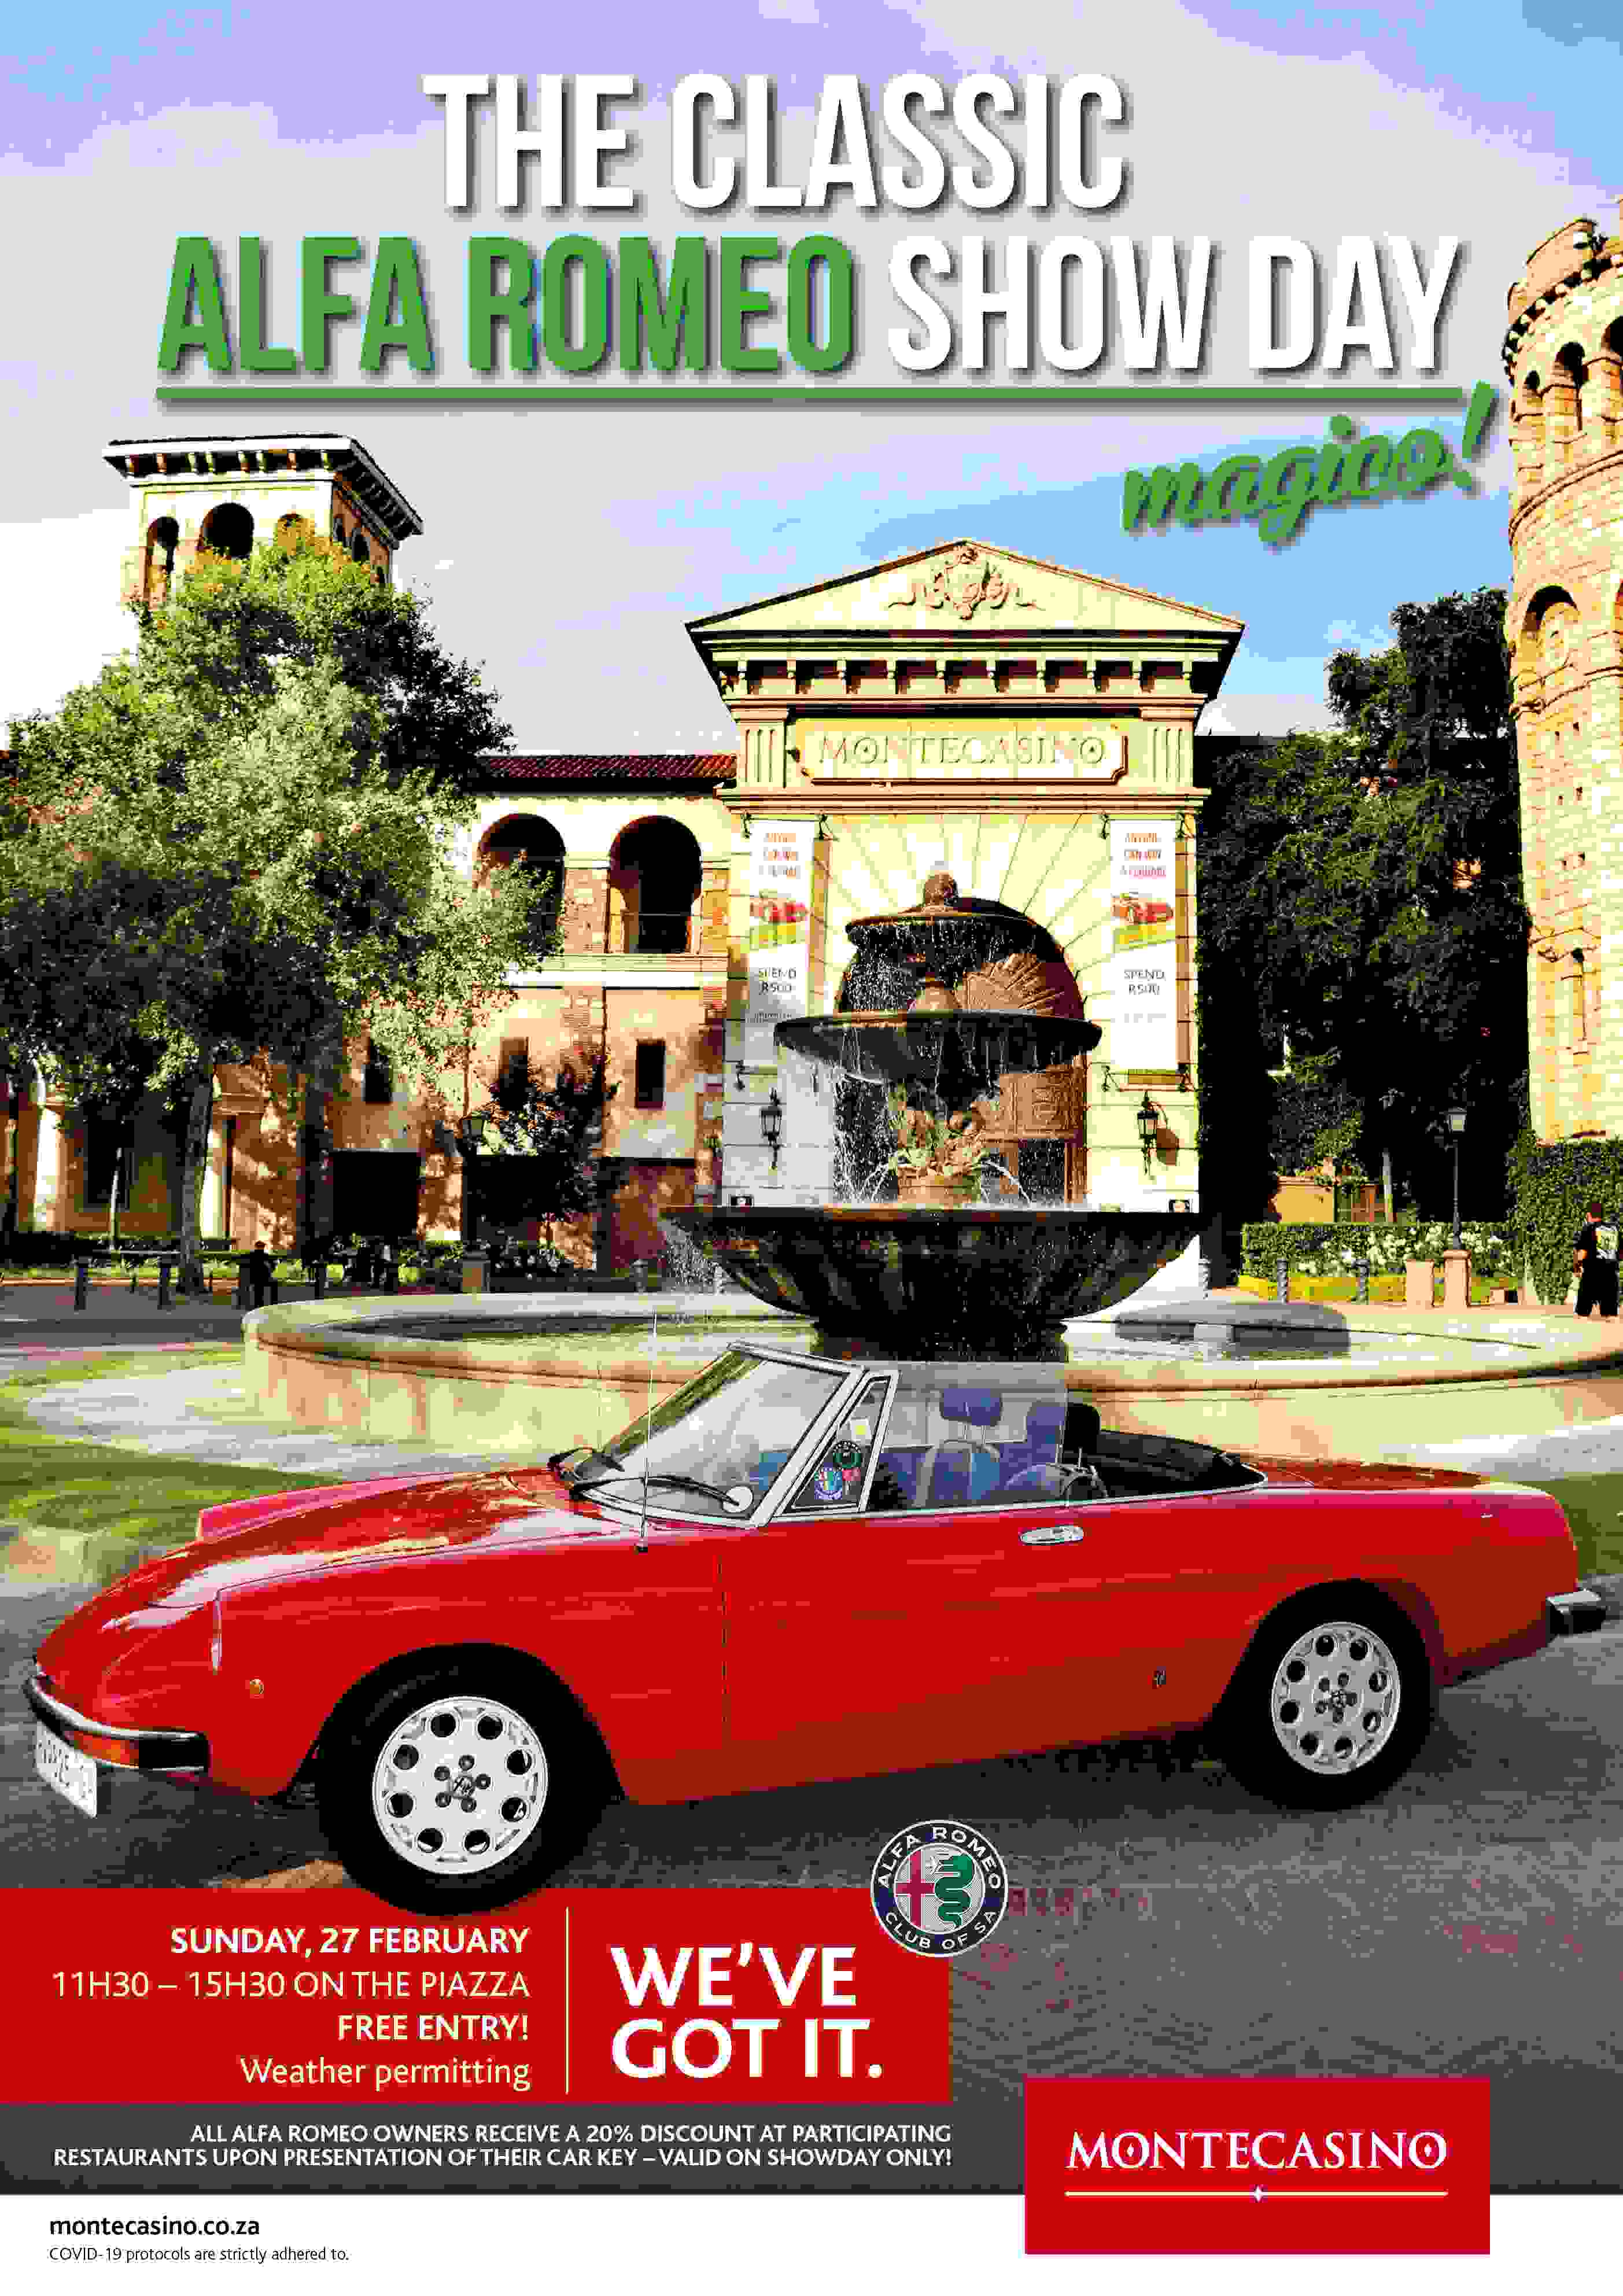 The Classic Alfa Romeo show day